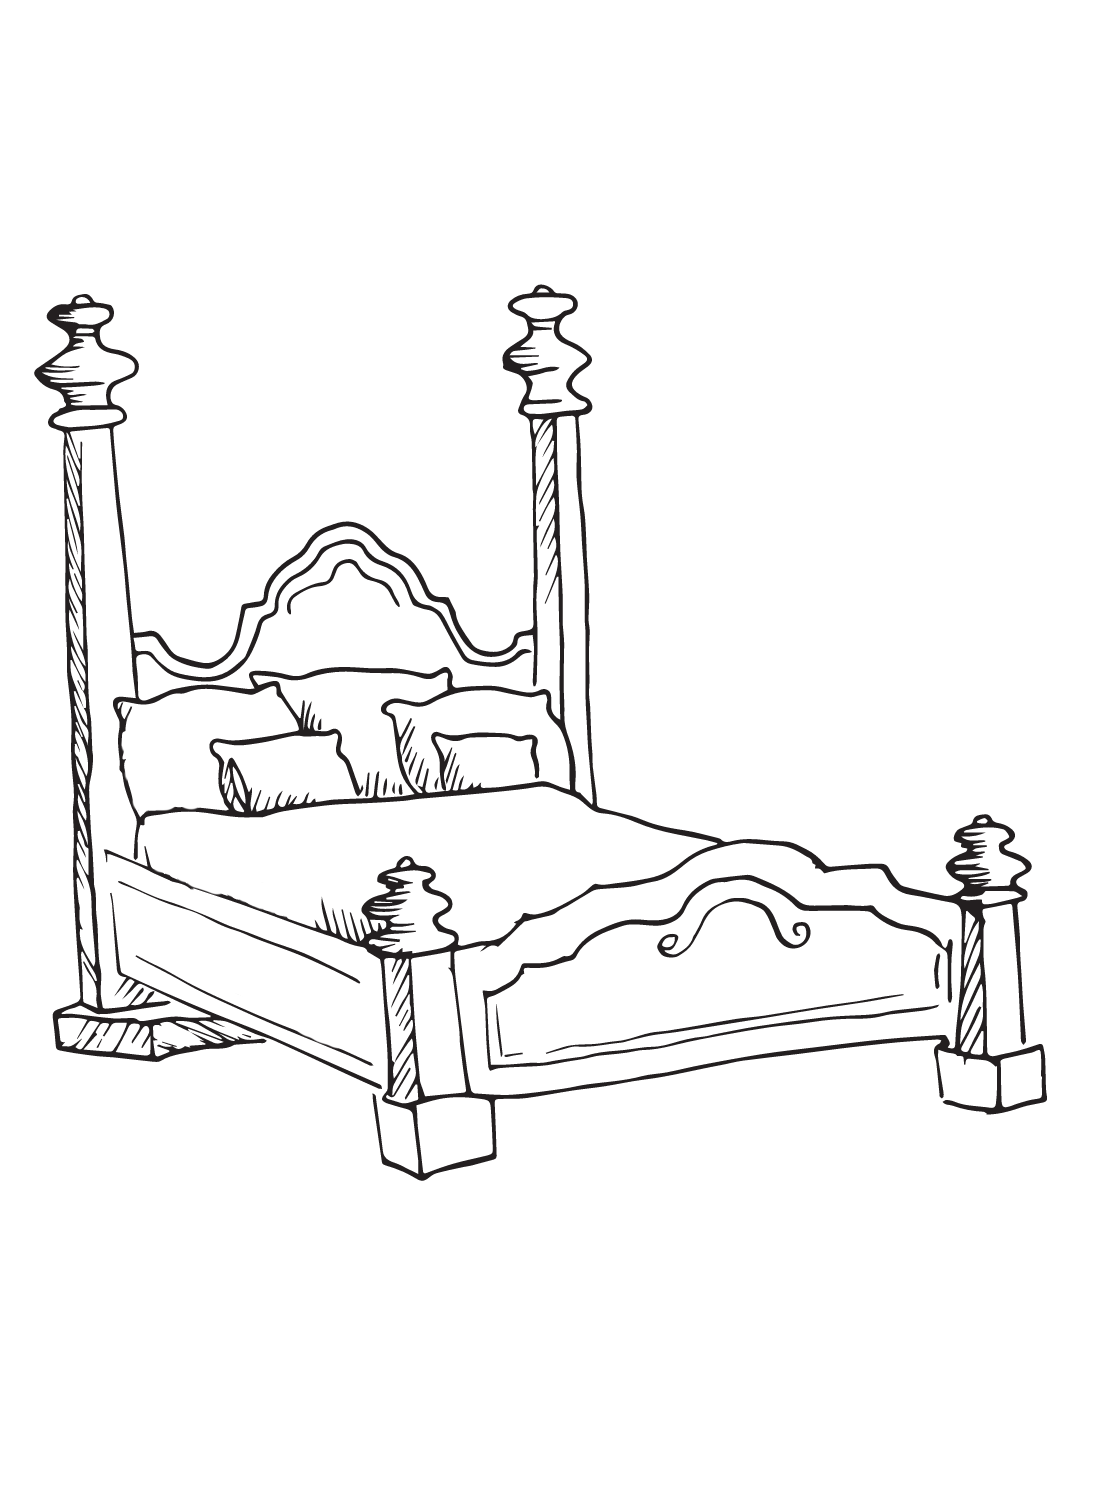 Bett vom Bett aus ausdruckbar